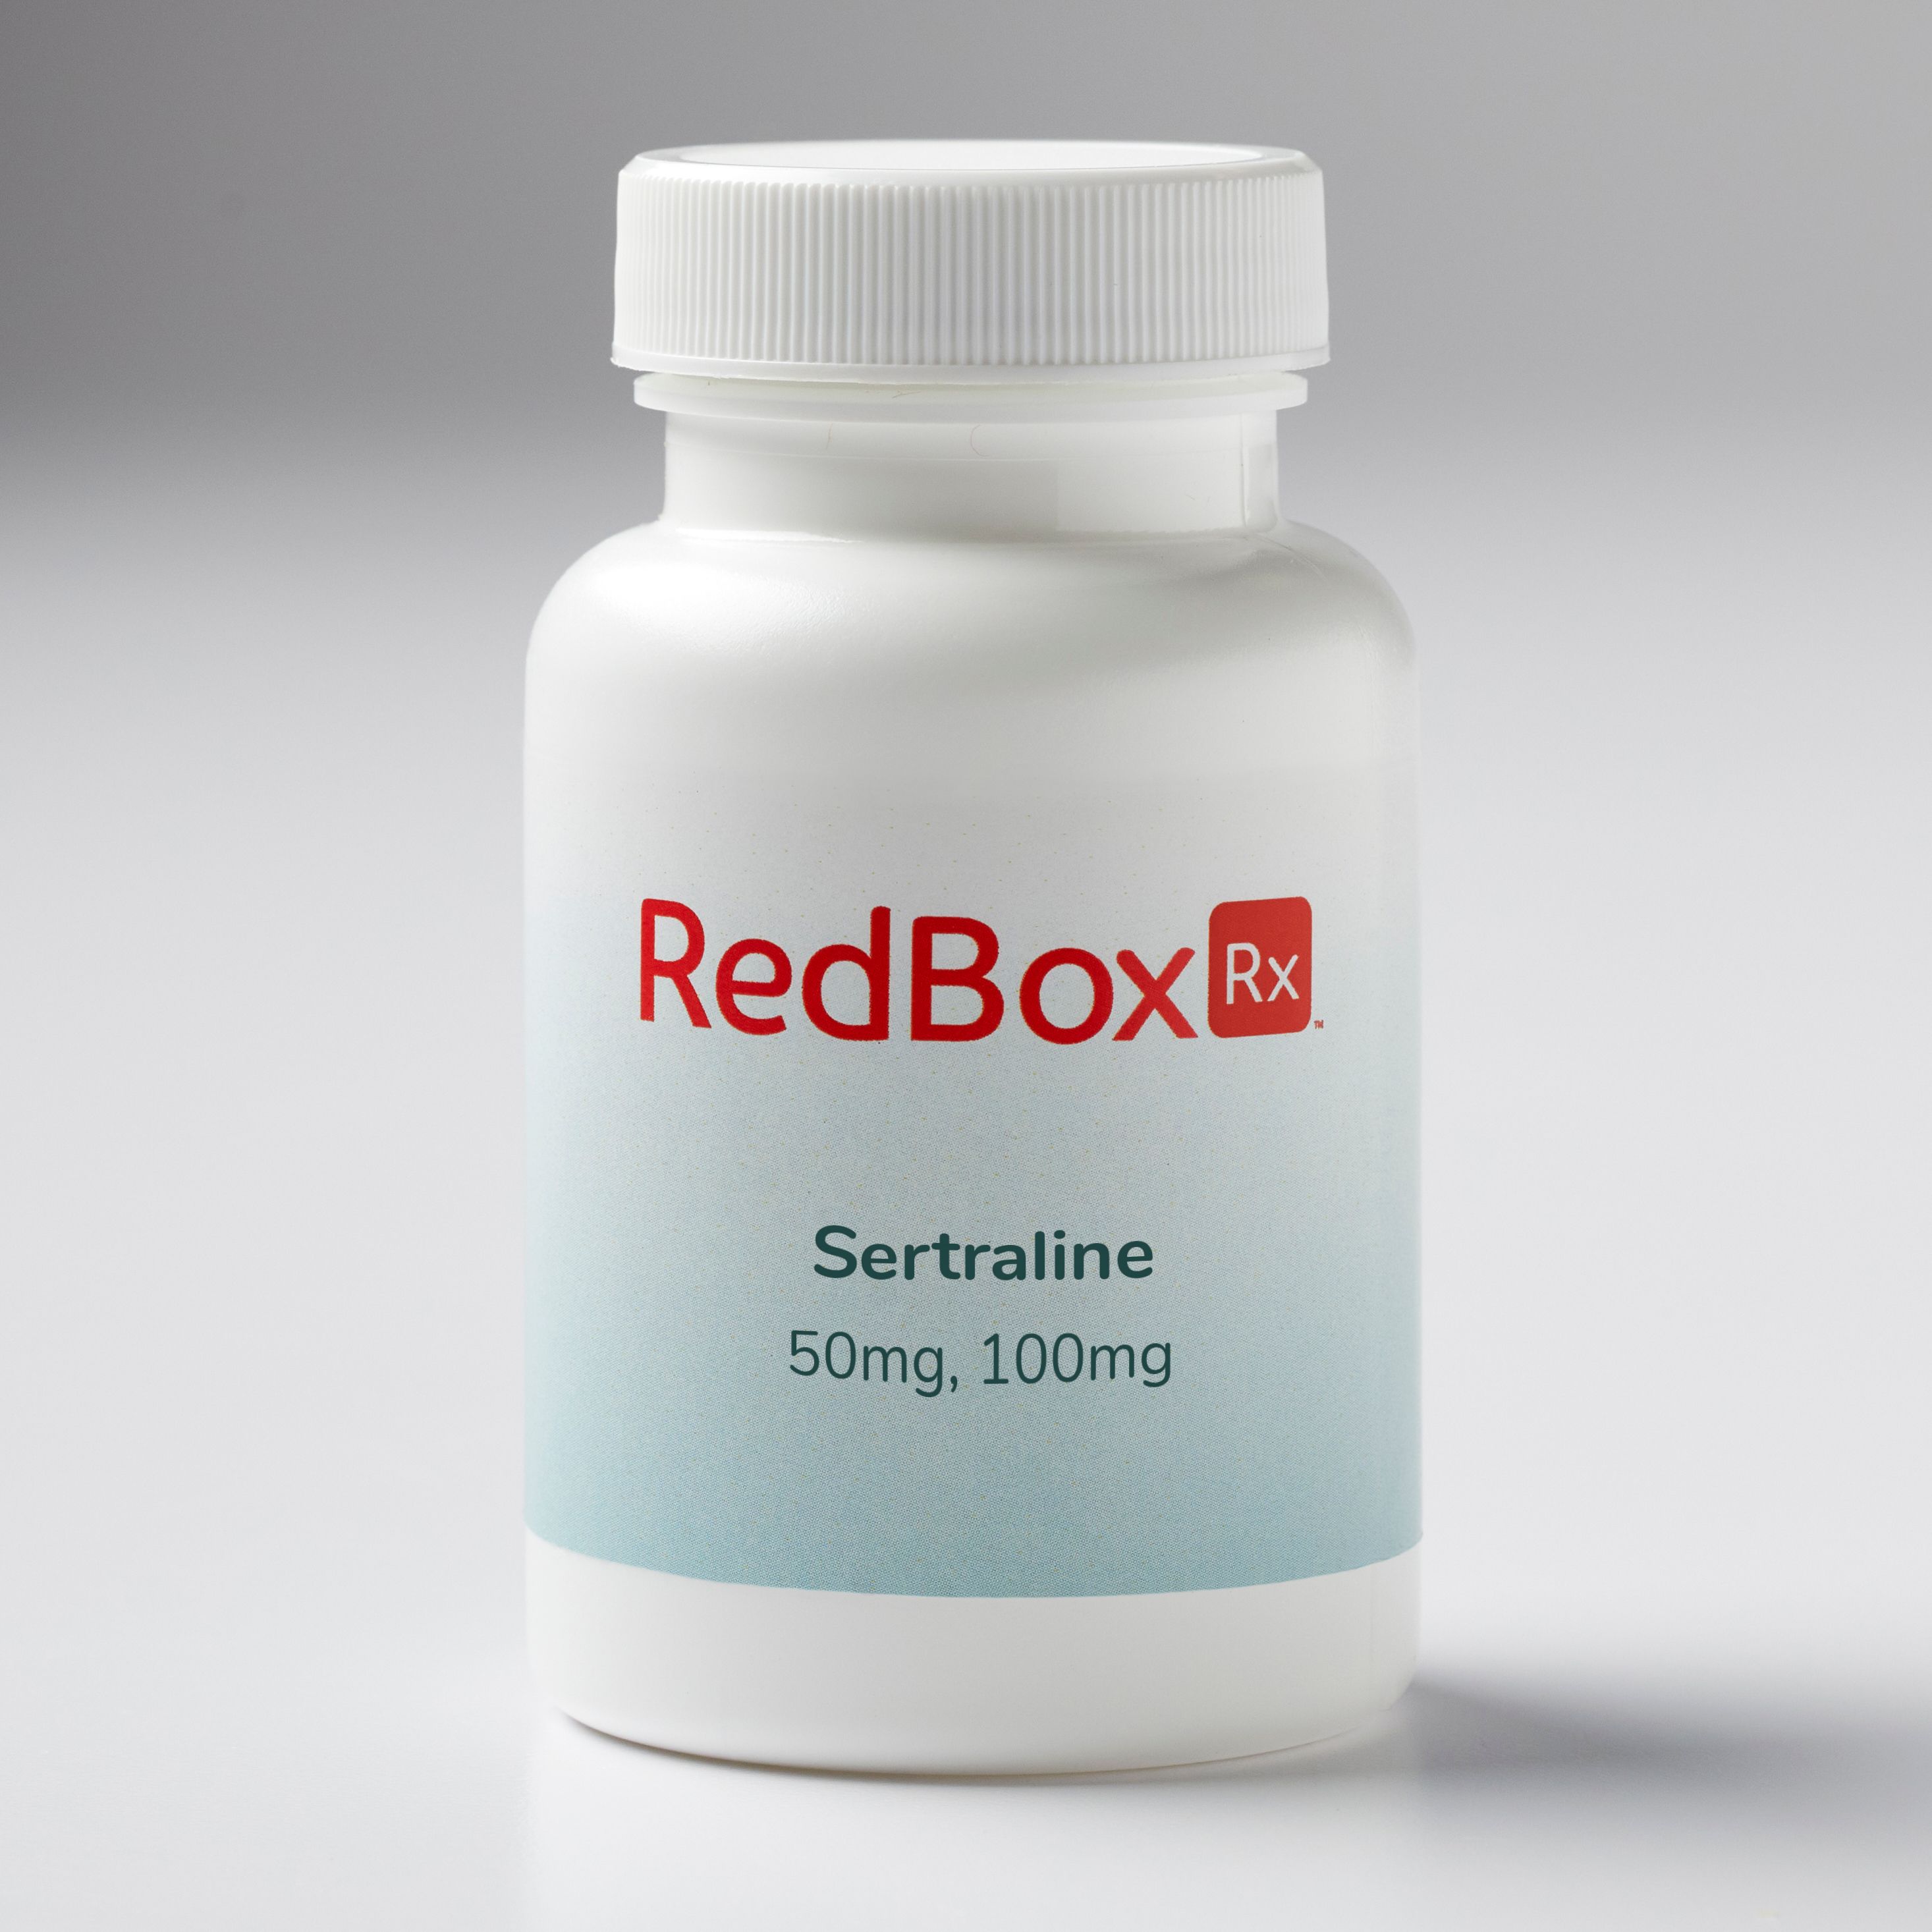 An image of sertraline